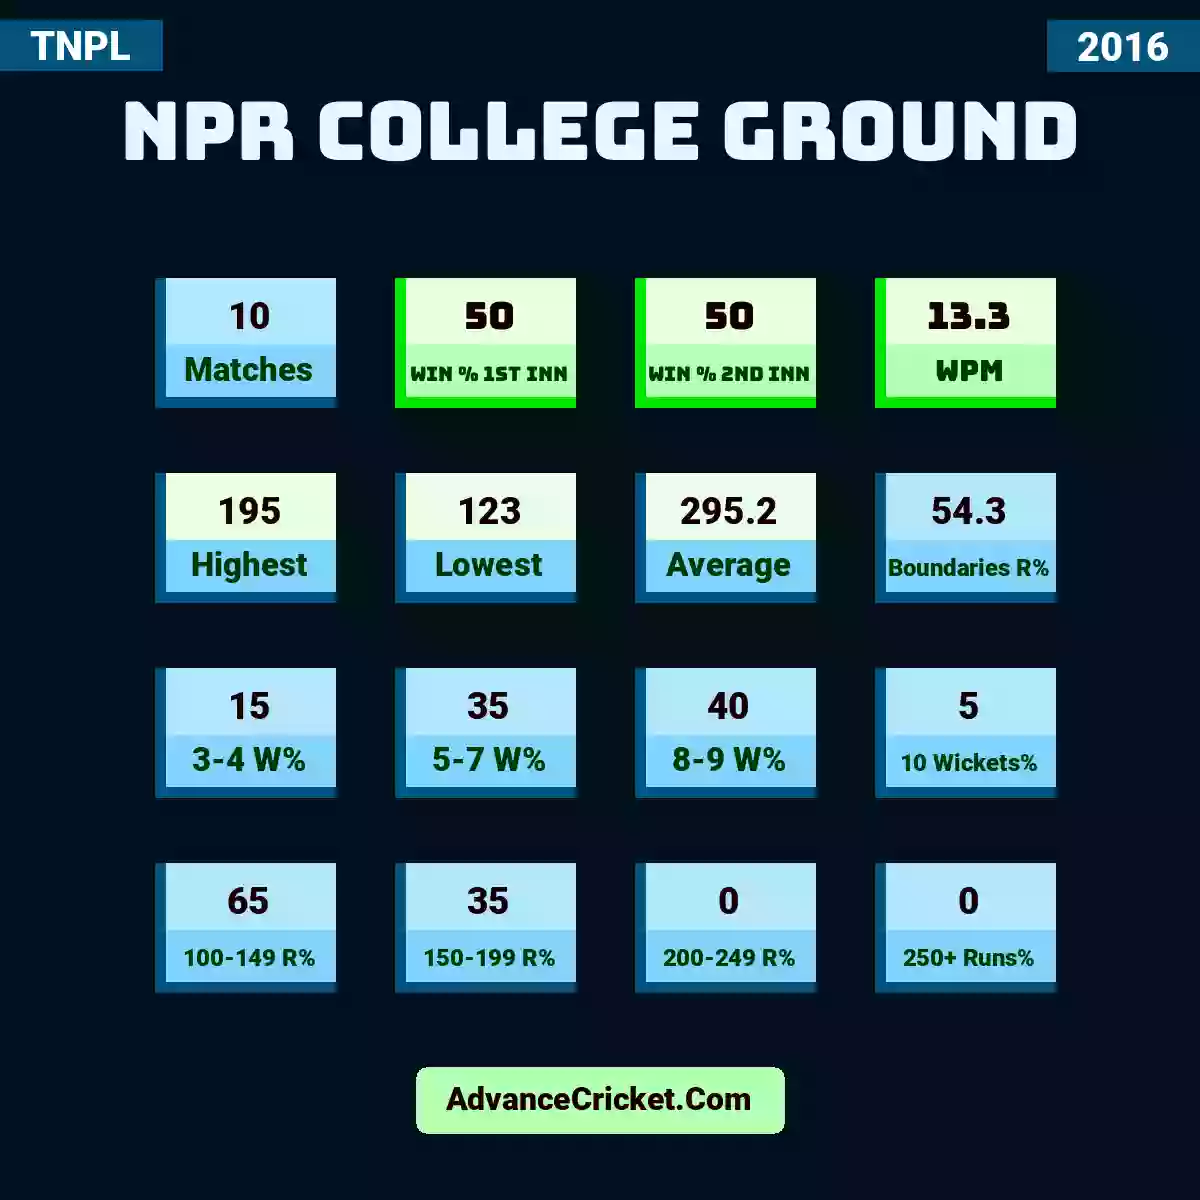 Image showing NPR College Ground with Matches: 10, Win % 1st Inn: 50, Win % 2nd Inn: 50, WPM: 13.3, Highest: 195, Lowest: 123, Average: 295.2, Boundaries R%: 54.3, 3-4 W%: 15, 5-7 W%: 35, 8-9 W%: 40, 10 Wickets%: 5, 100-149 R%: 65, 150-199 R%: 35, 200-249 R%: 0, 250+ Runs%: 0.